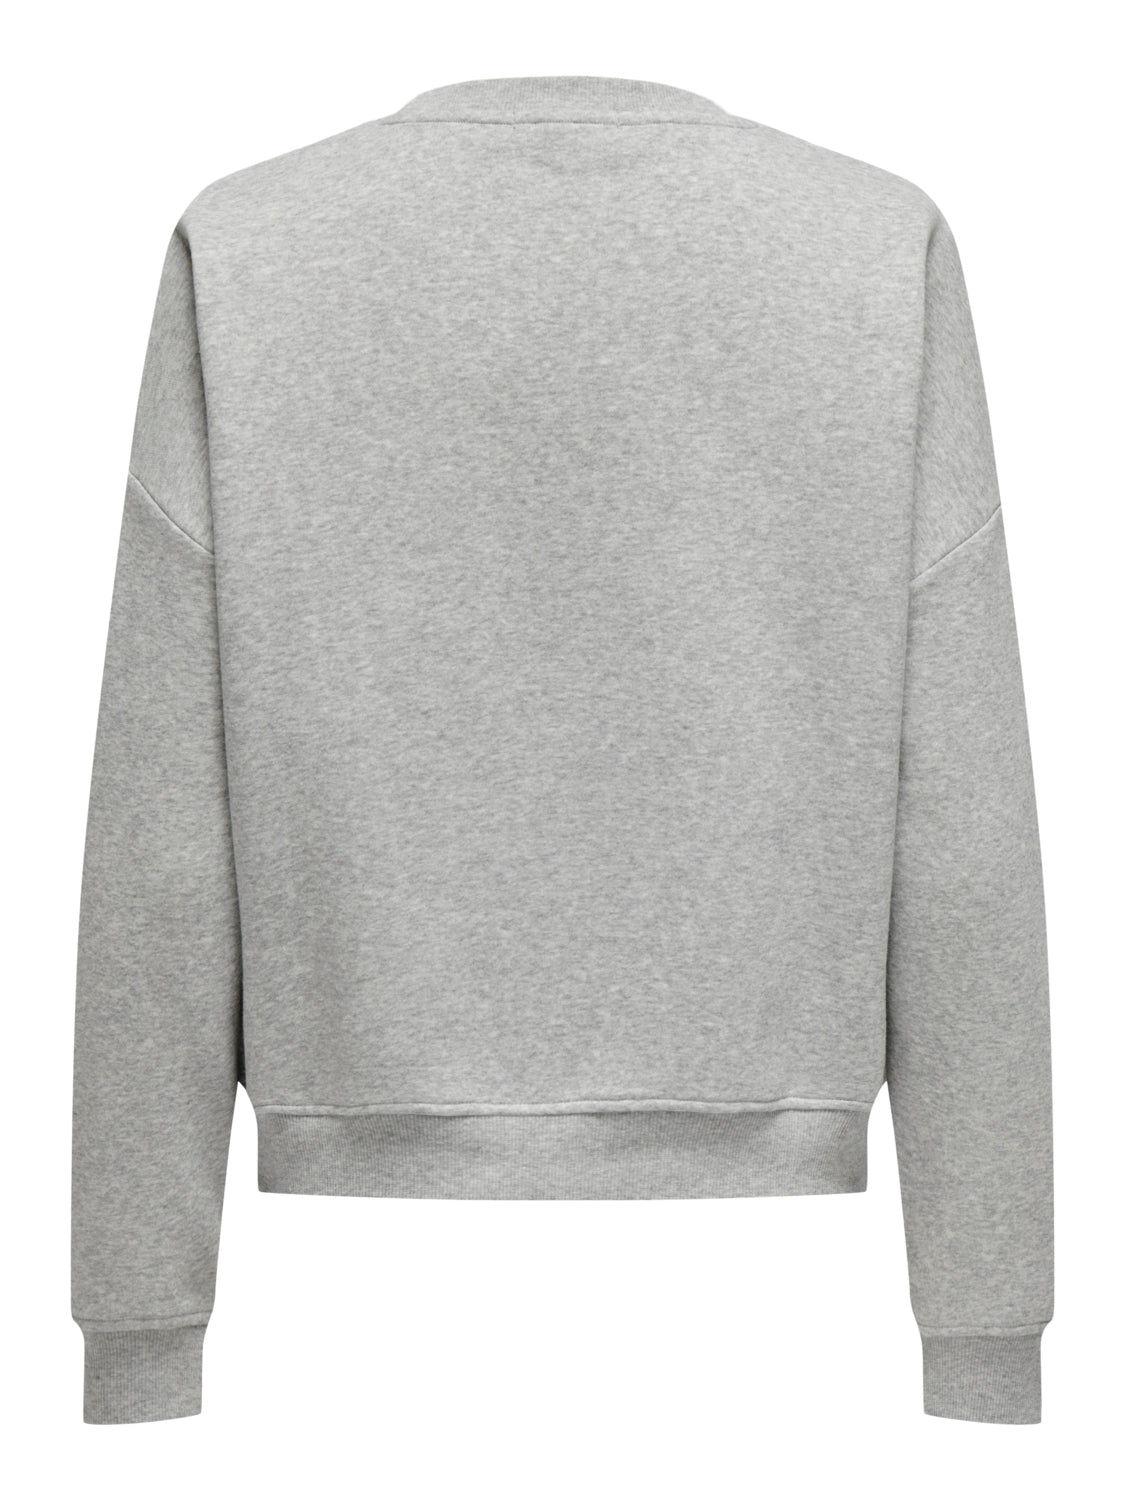 PGSWEET Sweater - Grå